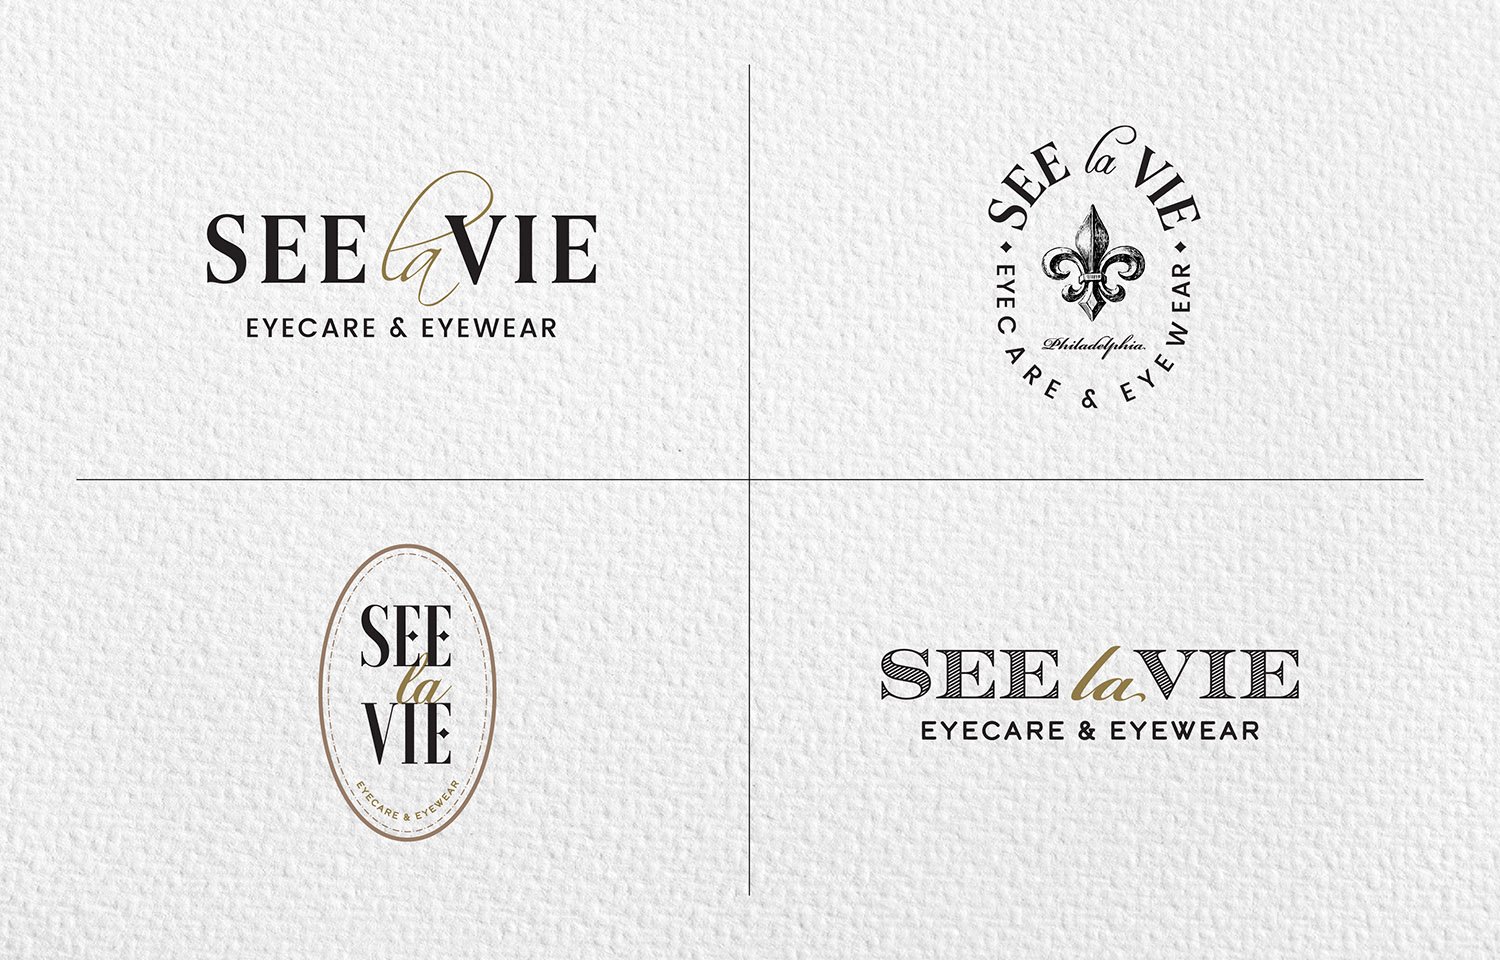 See La Vie optometry logo and brand identity